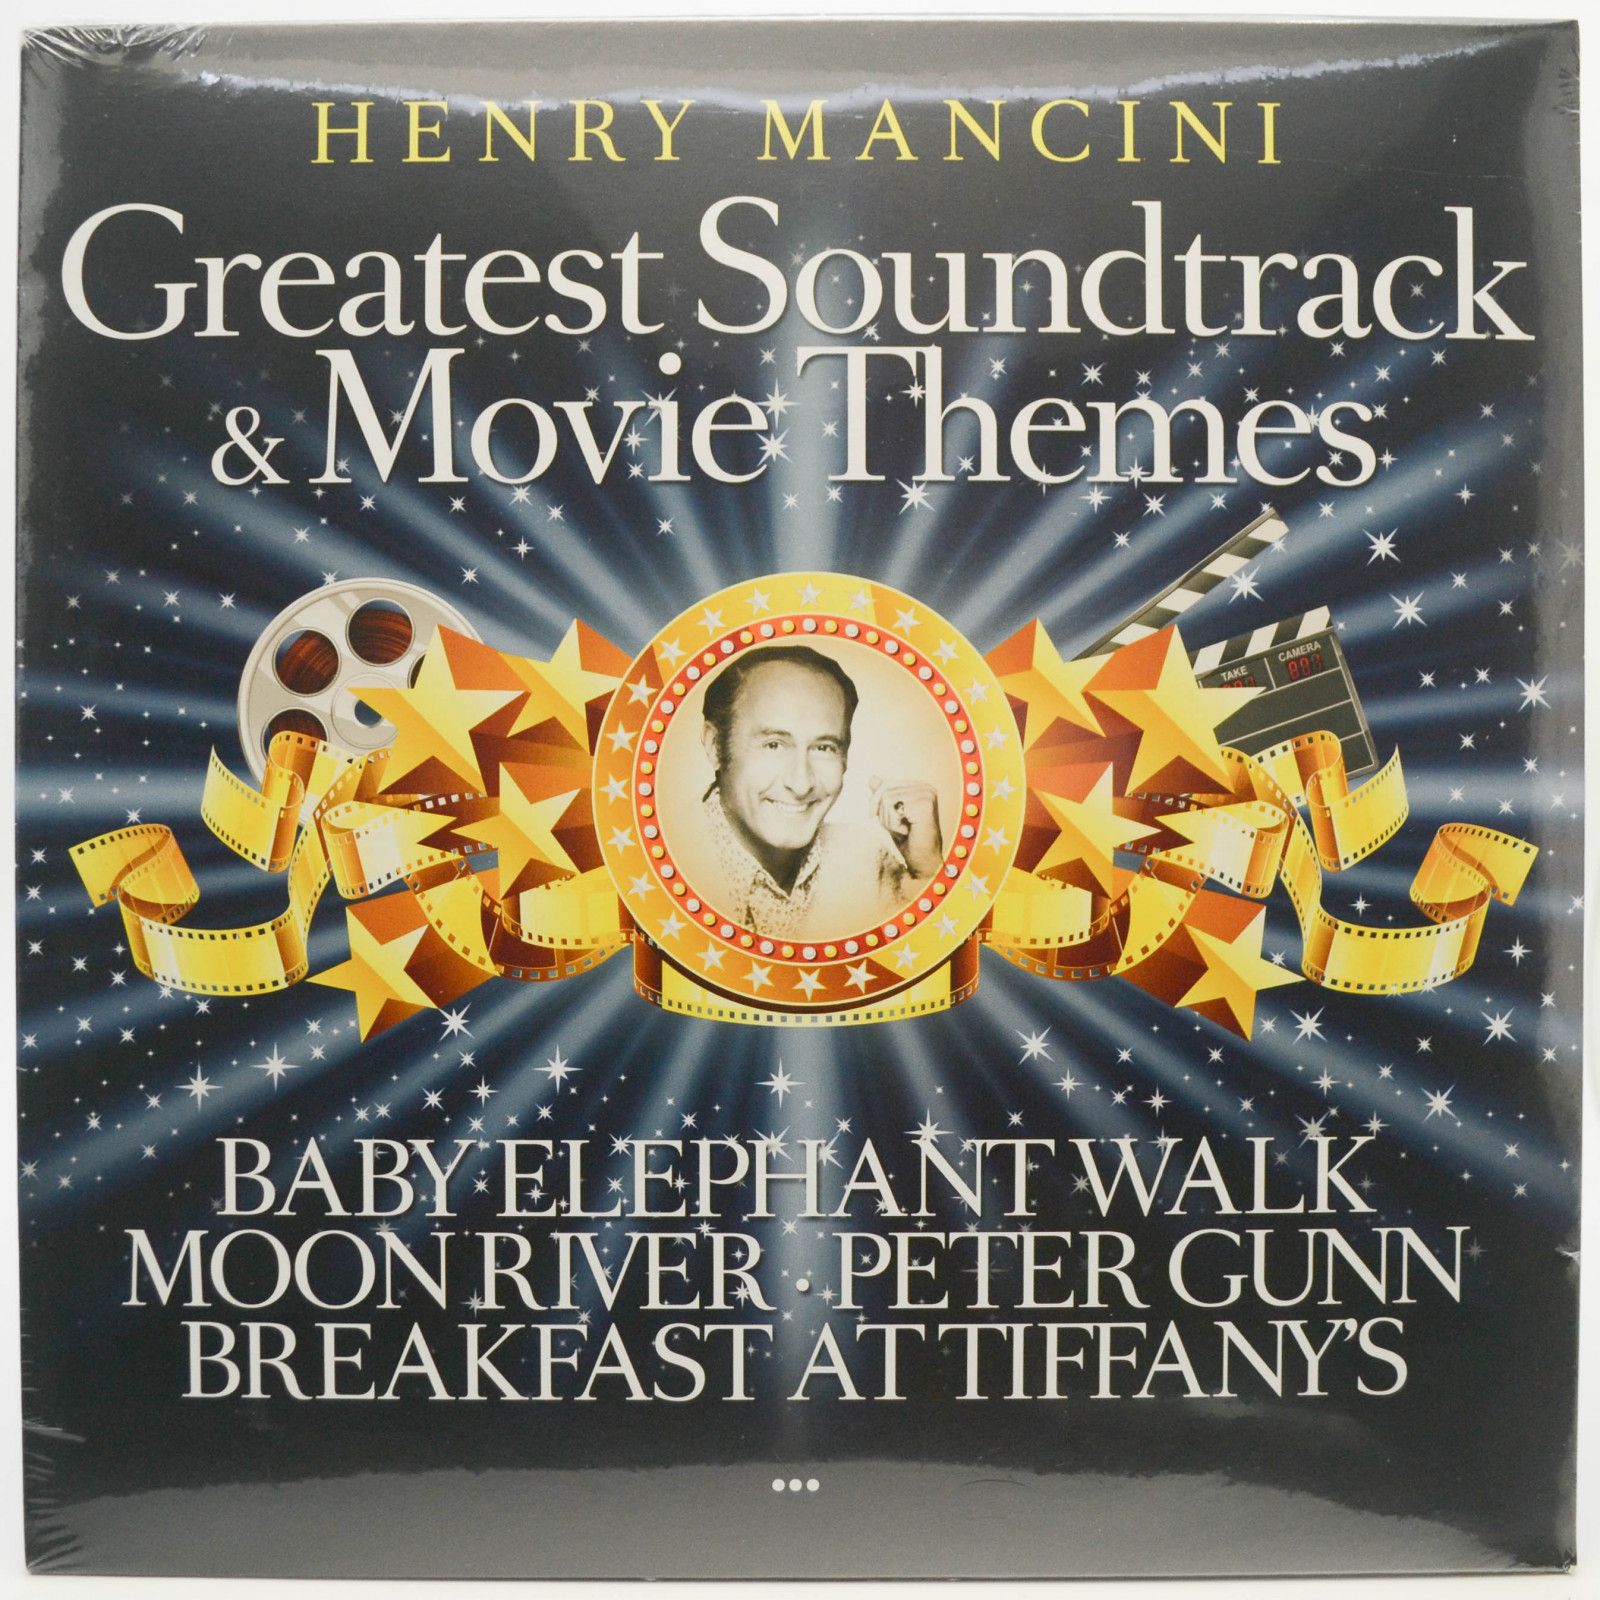 Henry Mancini — Greatest Soundtrack & Movie Themes, 2018